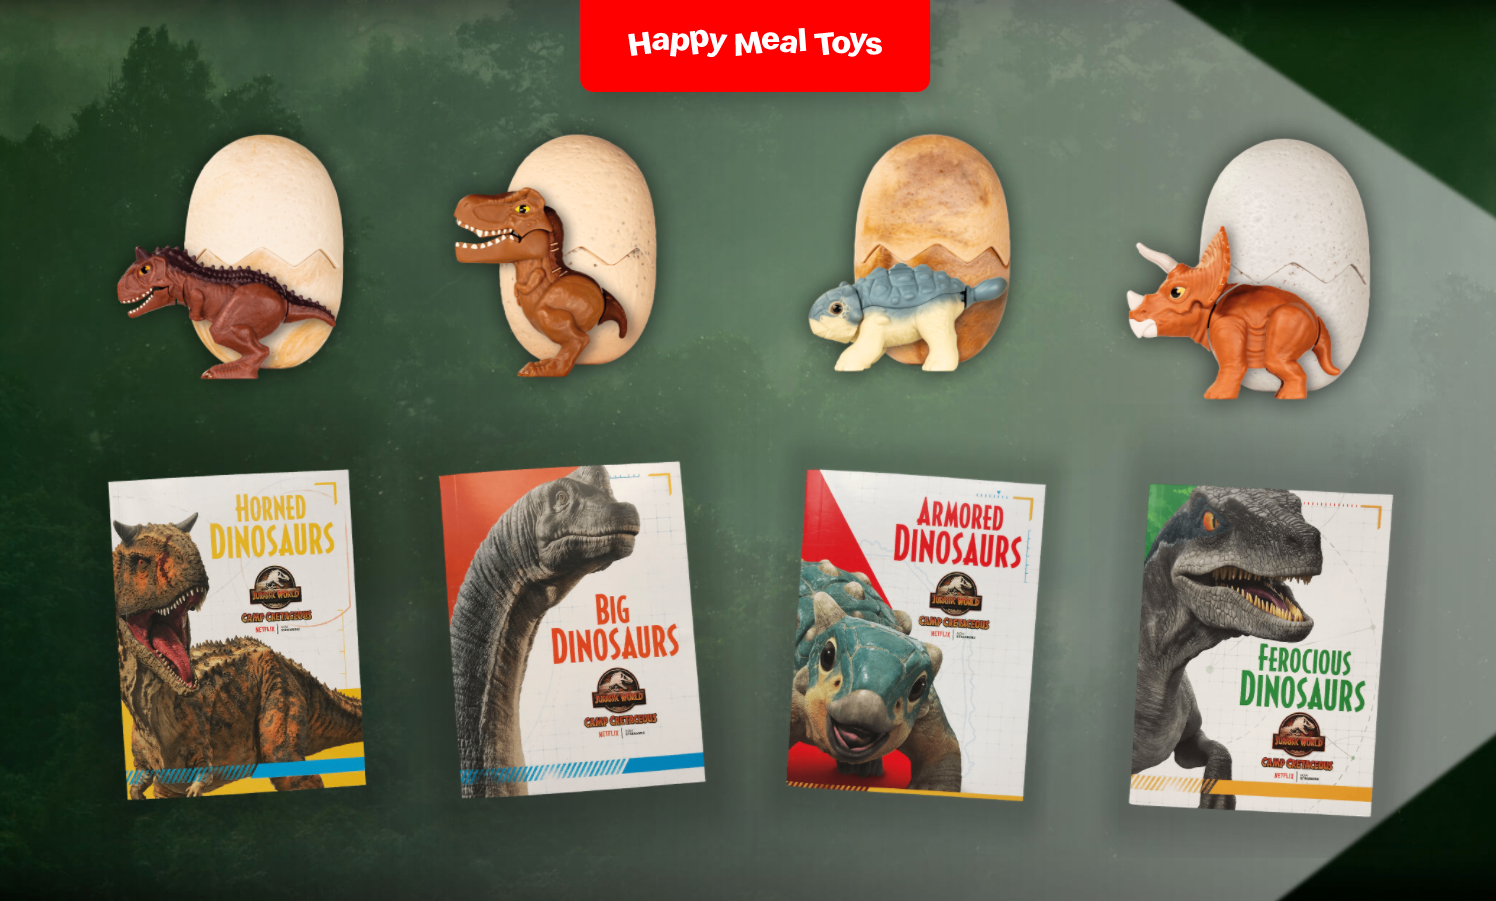 McDonald's Happy Meal Toy Jurassic World "Ferocious Dinosaurs" # 4 